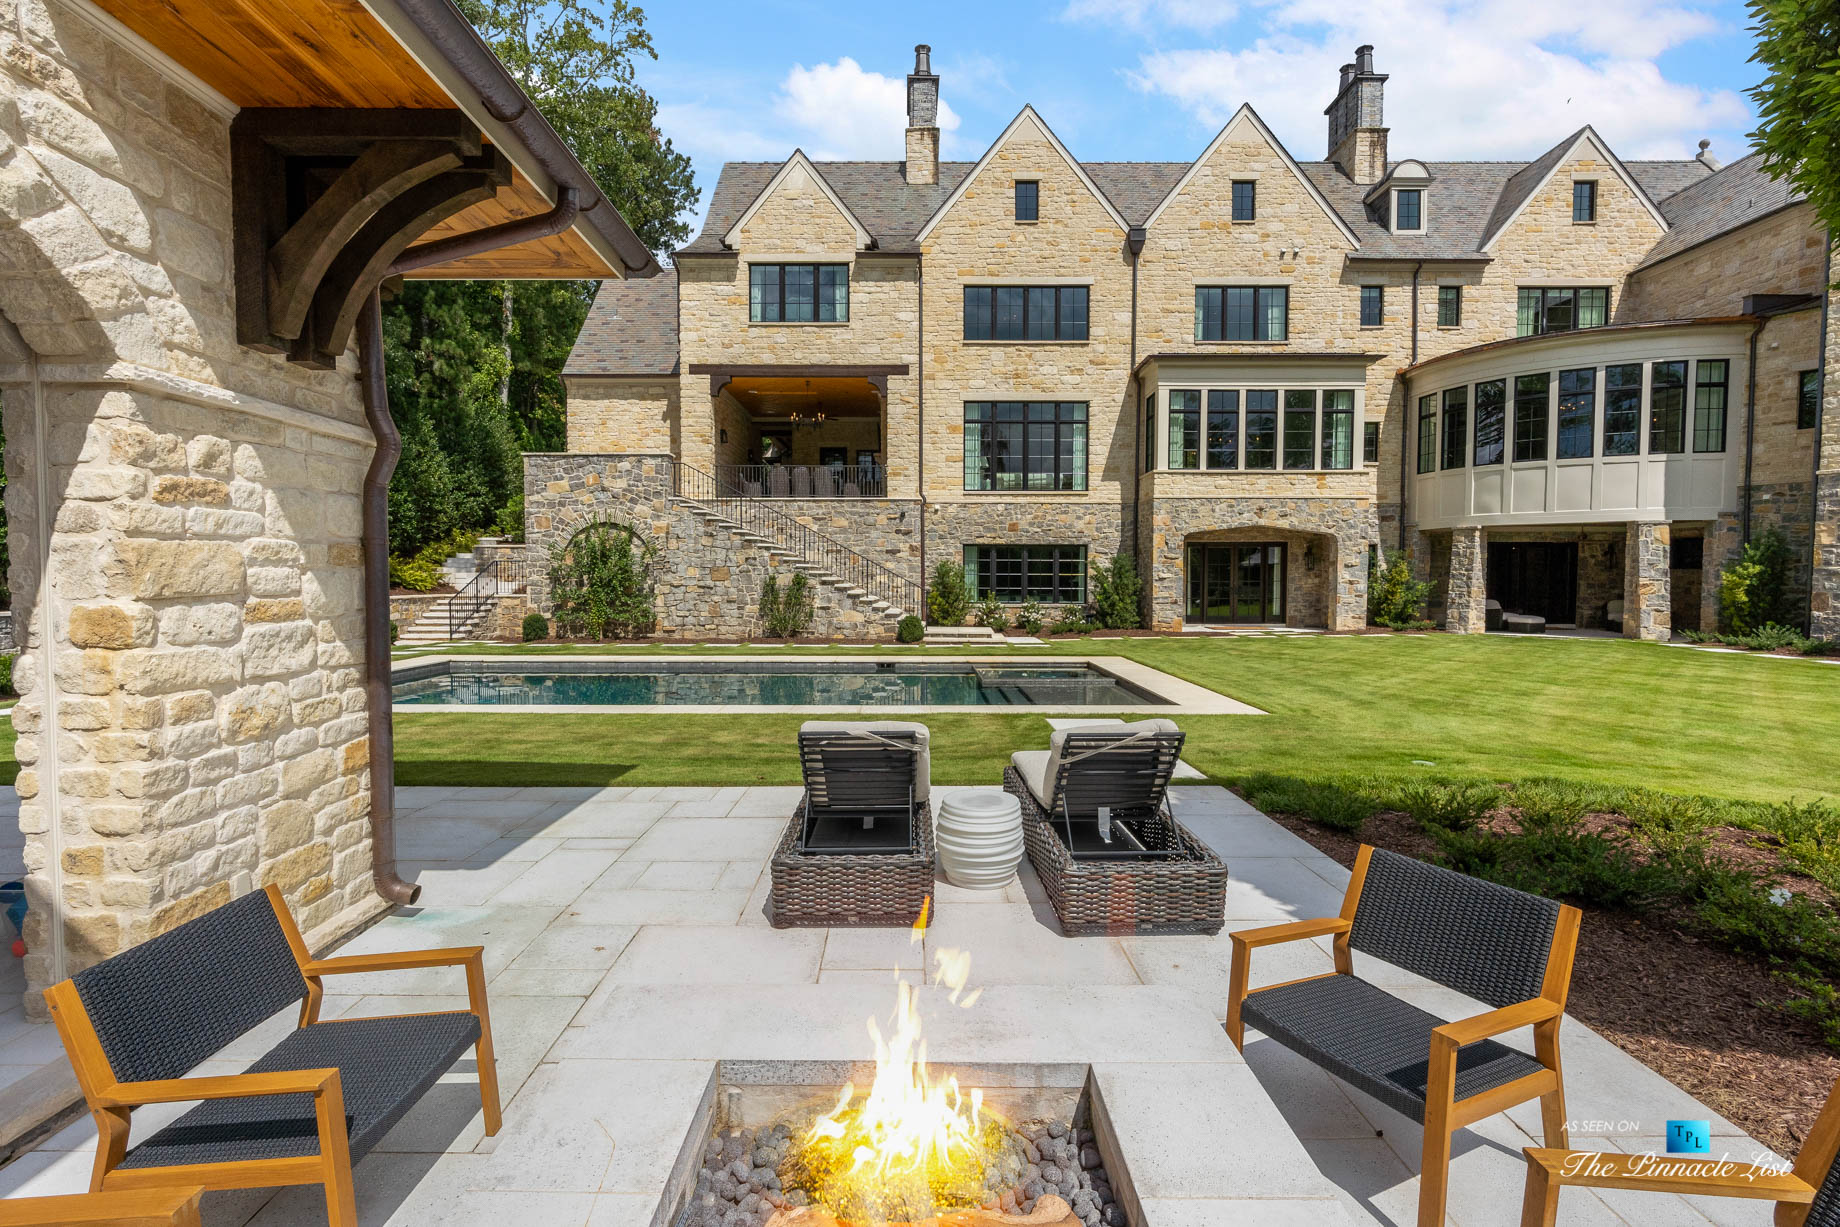 1150 W Garmon Rd, Atlanta, GA, USA – Backyard Fire Pit Patio with Pool – Luxury Real Estate – Buckhead Estate Home